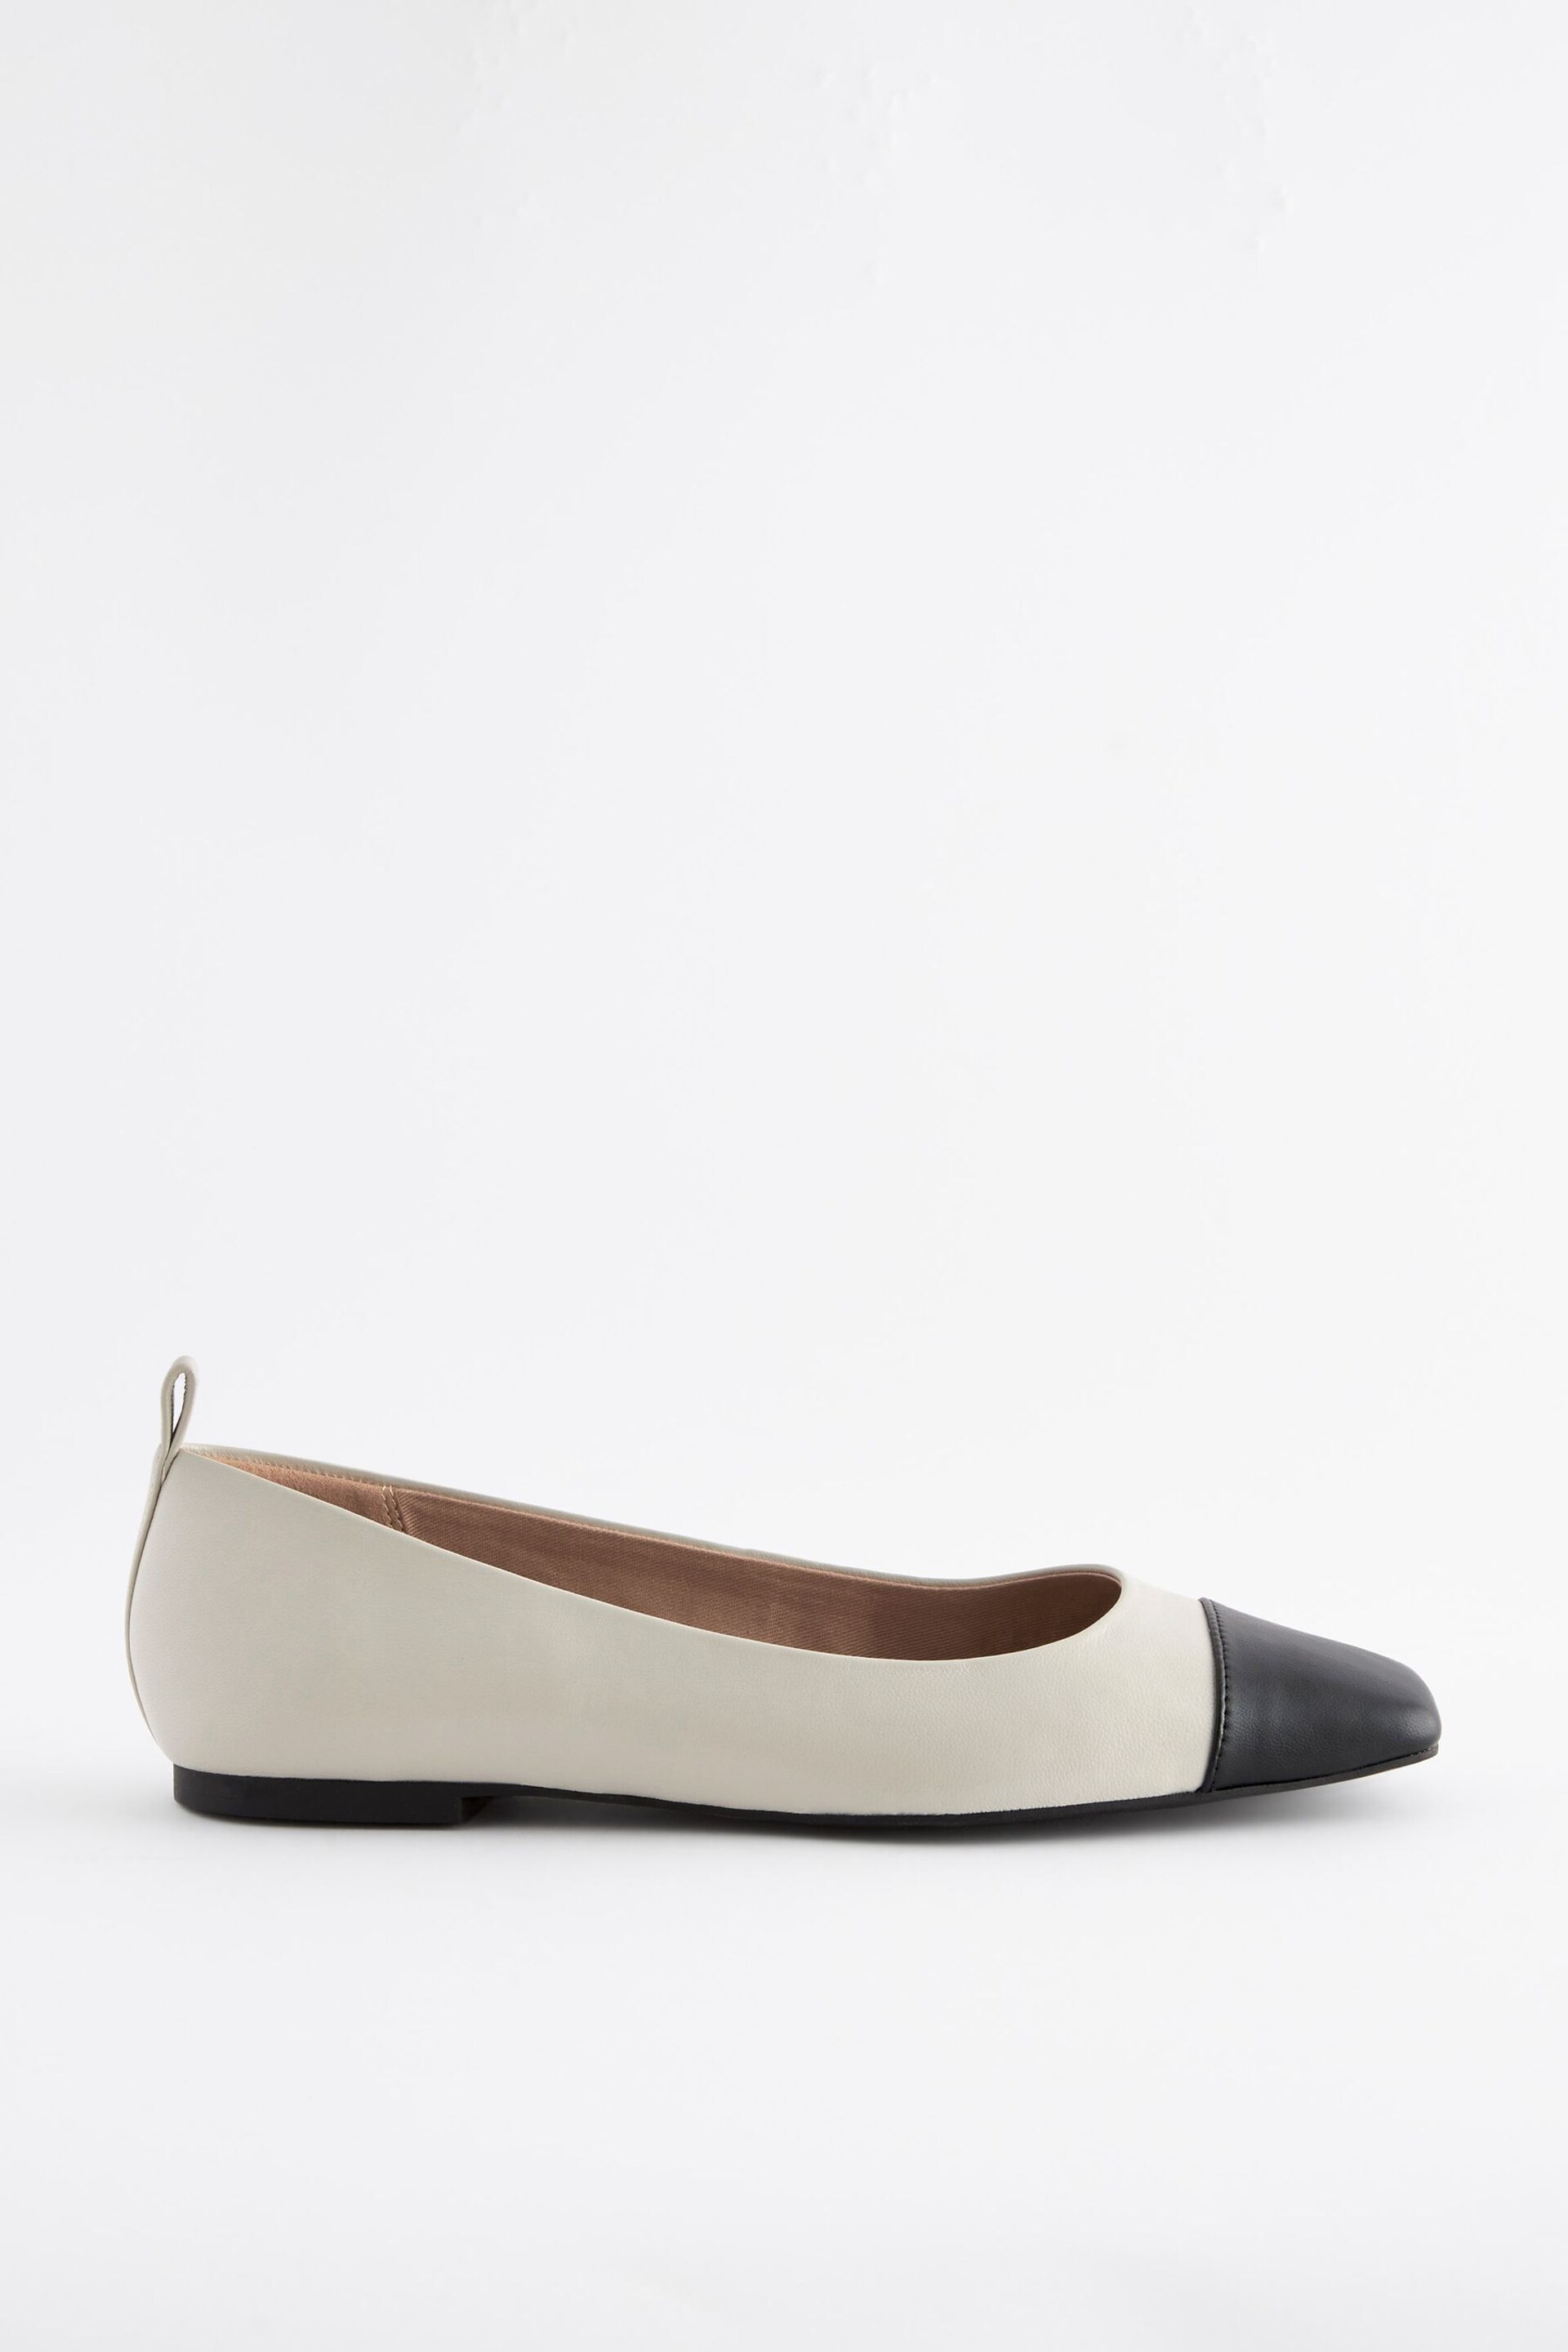 Bone White/Black Toe Cap Forever Comfort® Leather Toe Cap Ballerinas Shoes - Image 5 of 8